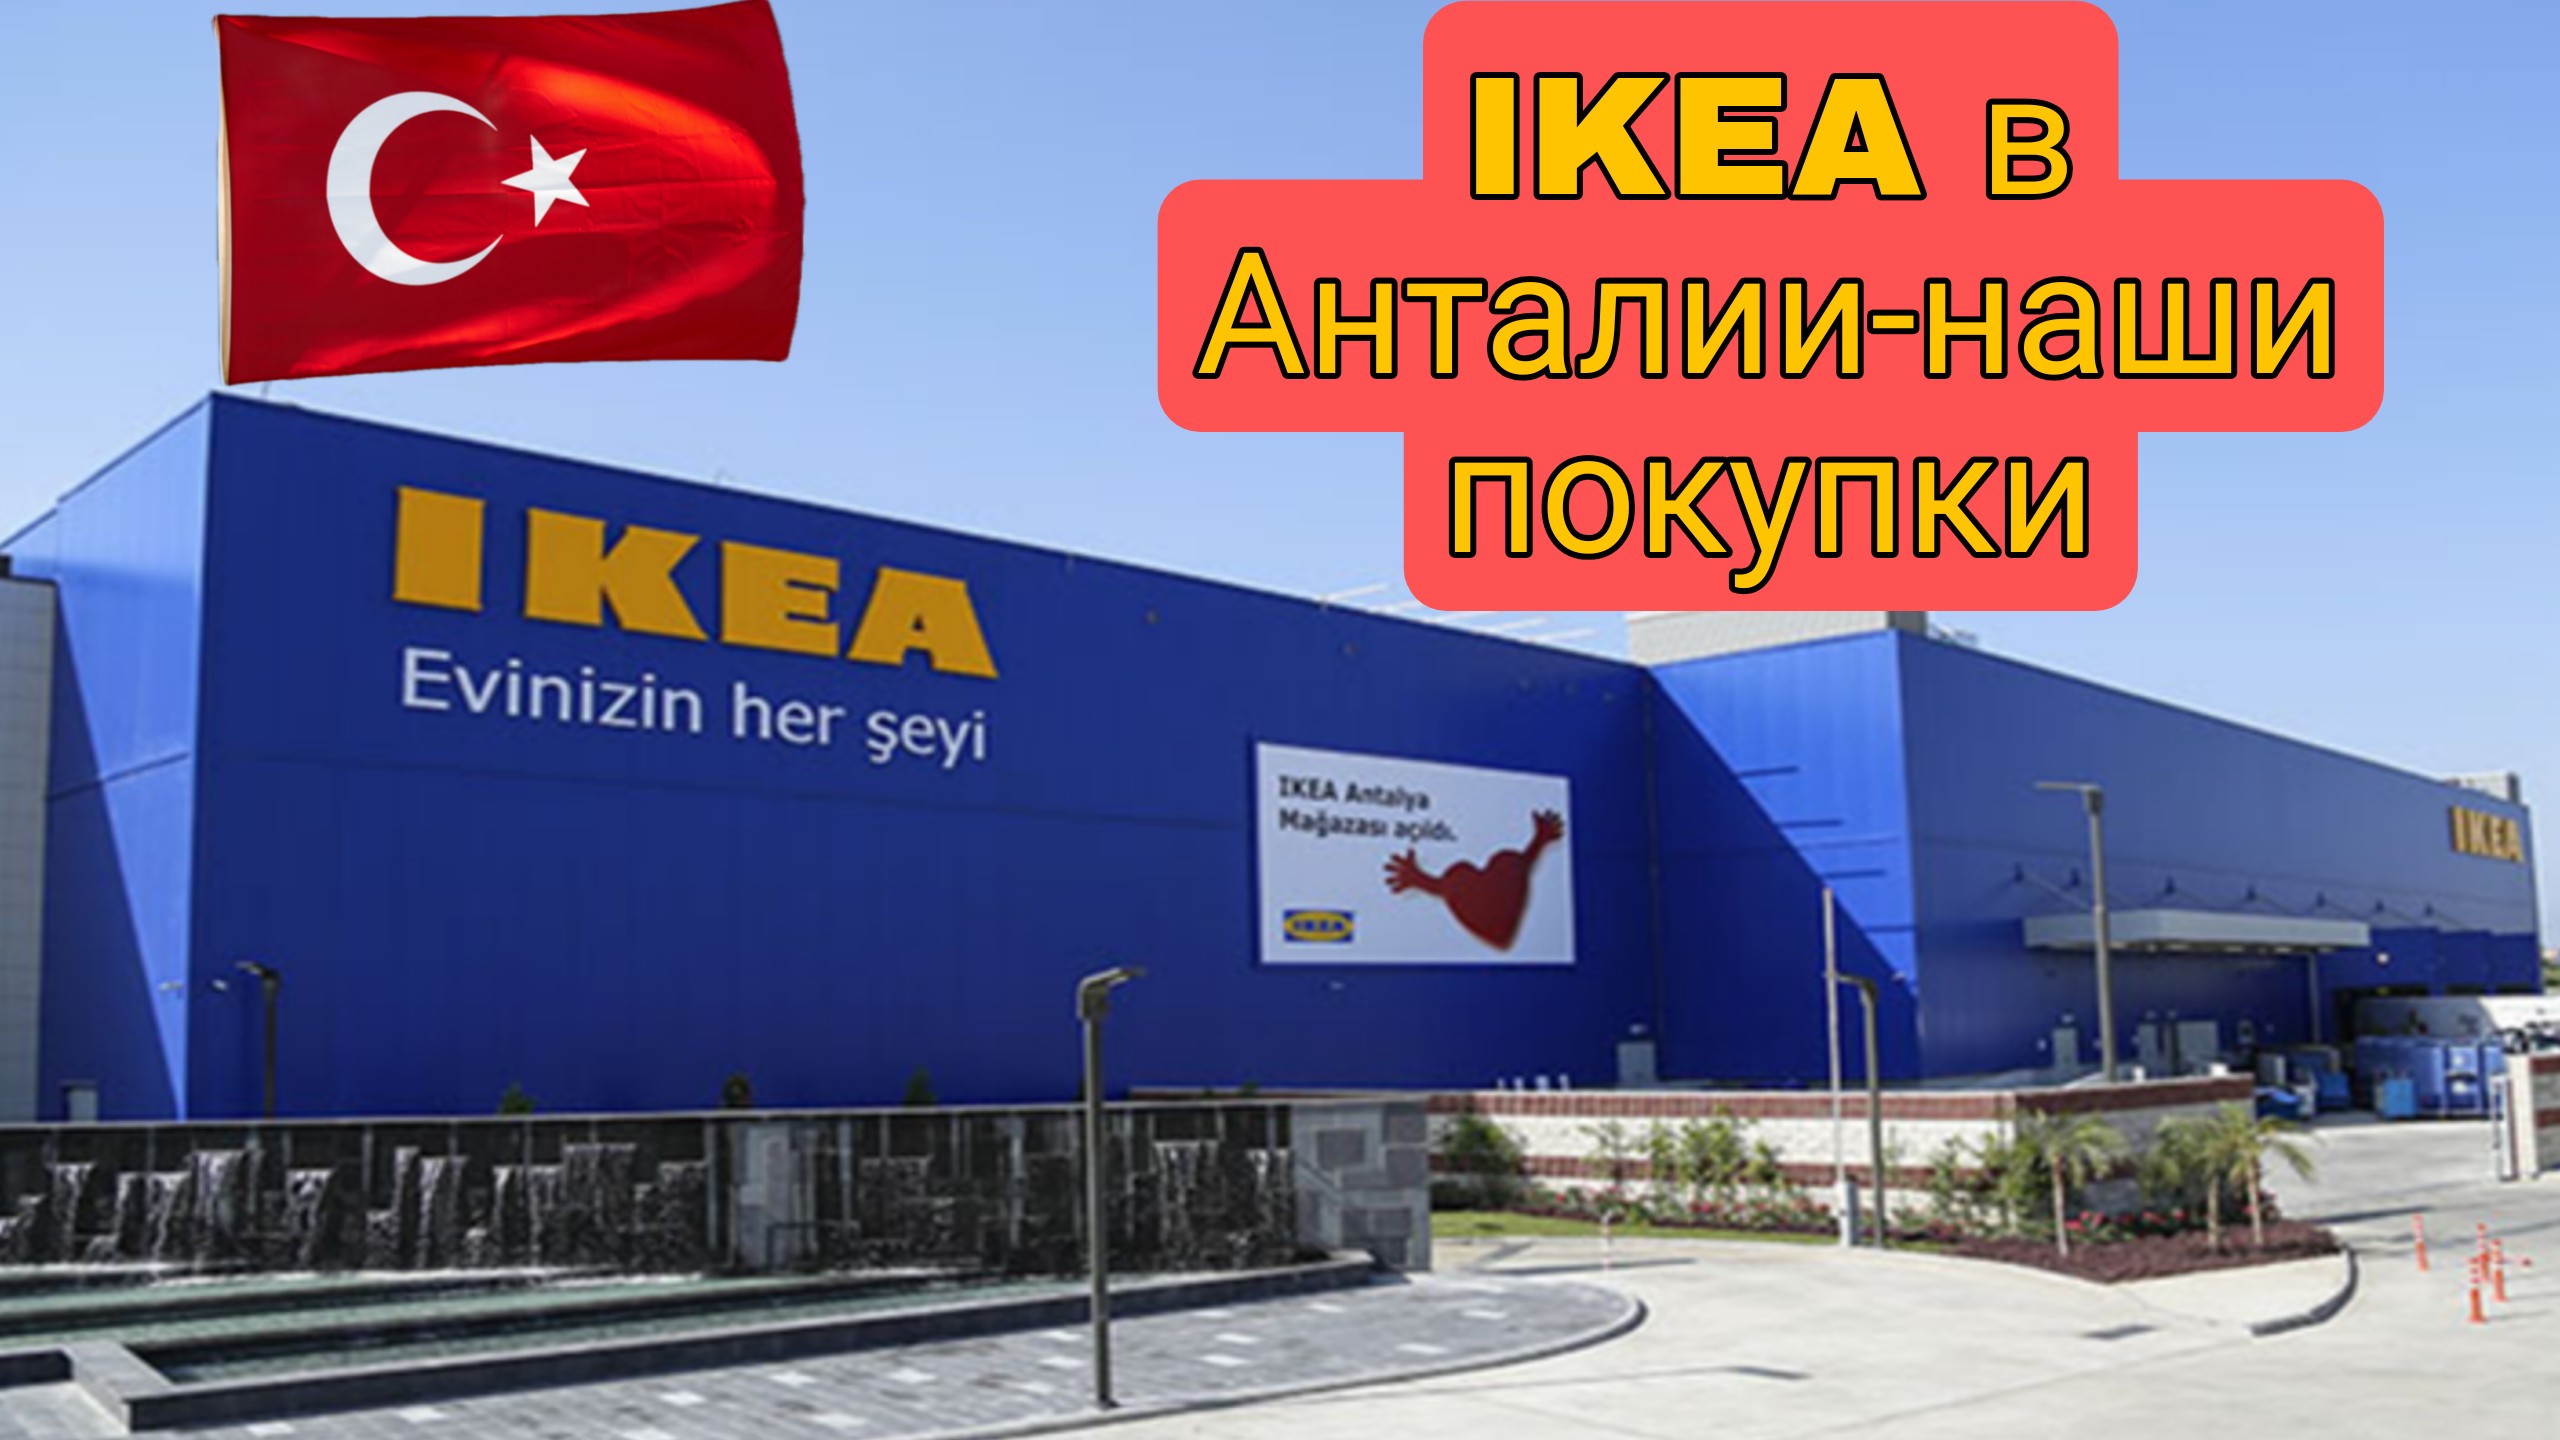 Икеа в анталии турция. Ikea Анталья. Икеа в Анталии. Икеа Турция. Ikea Turkey Antalya.